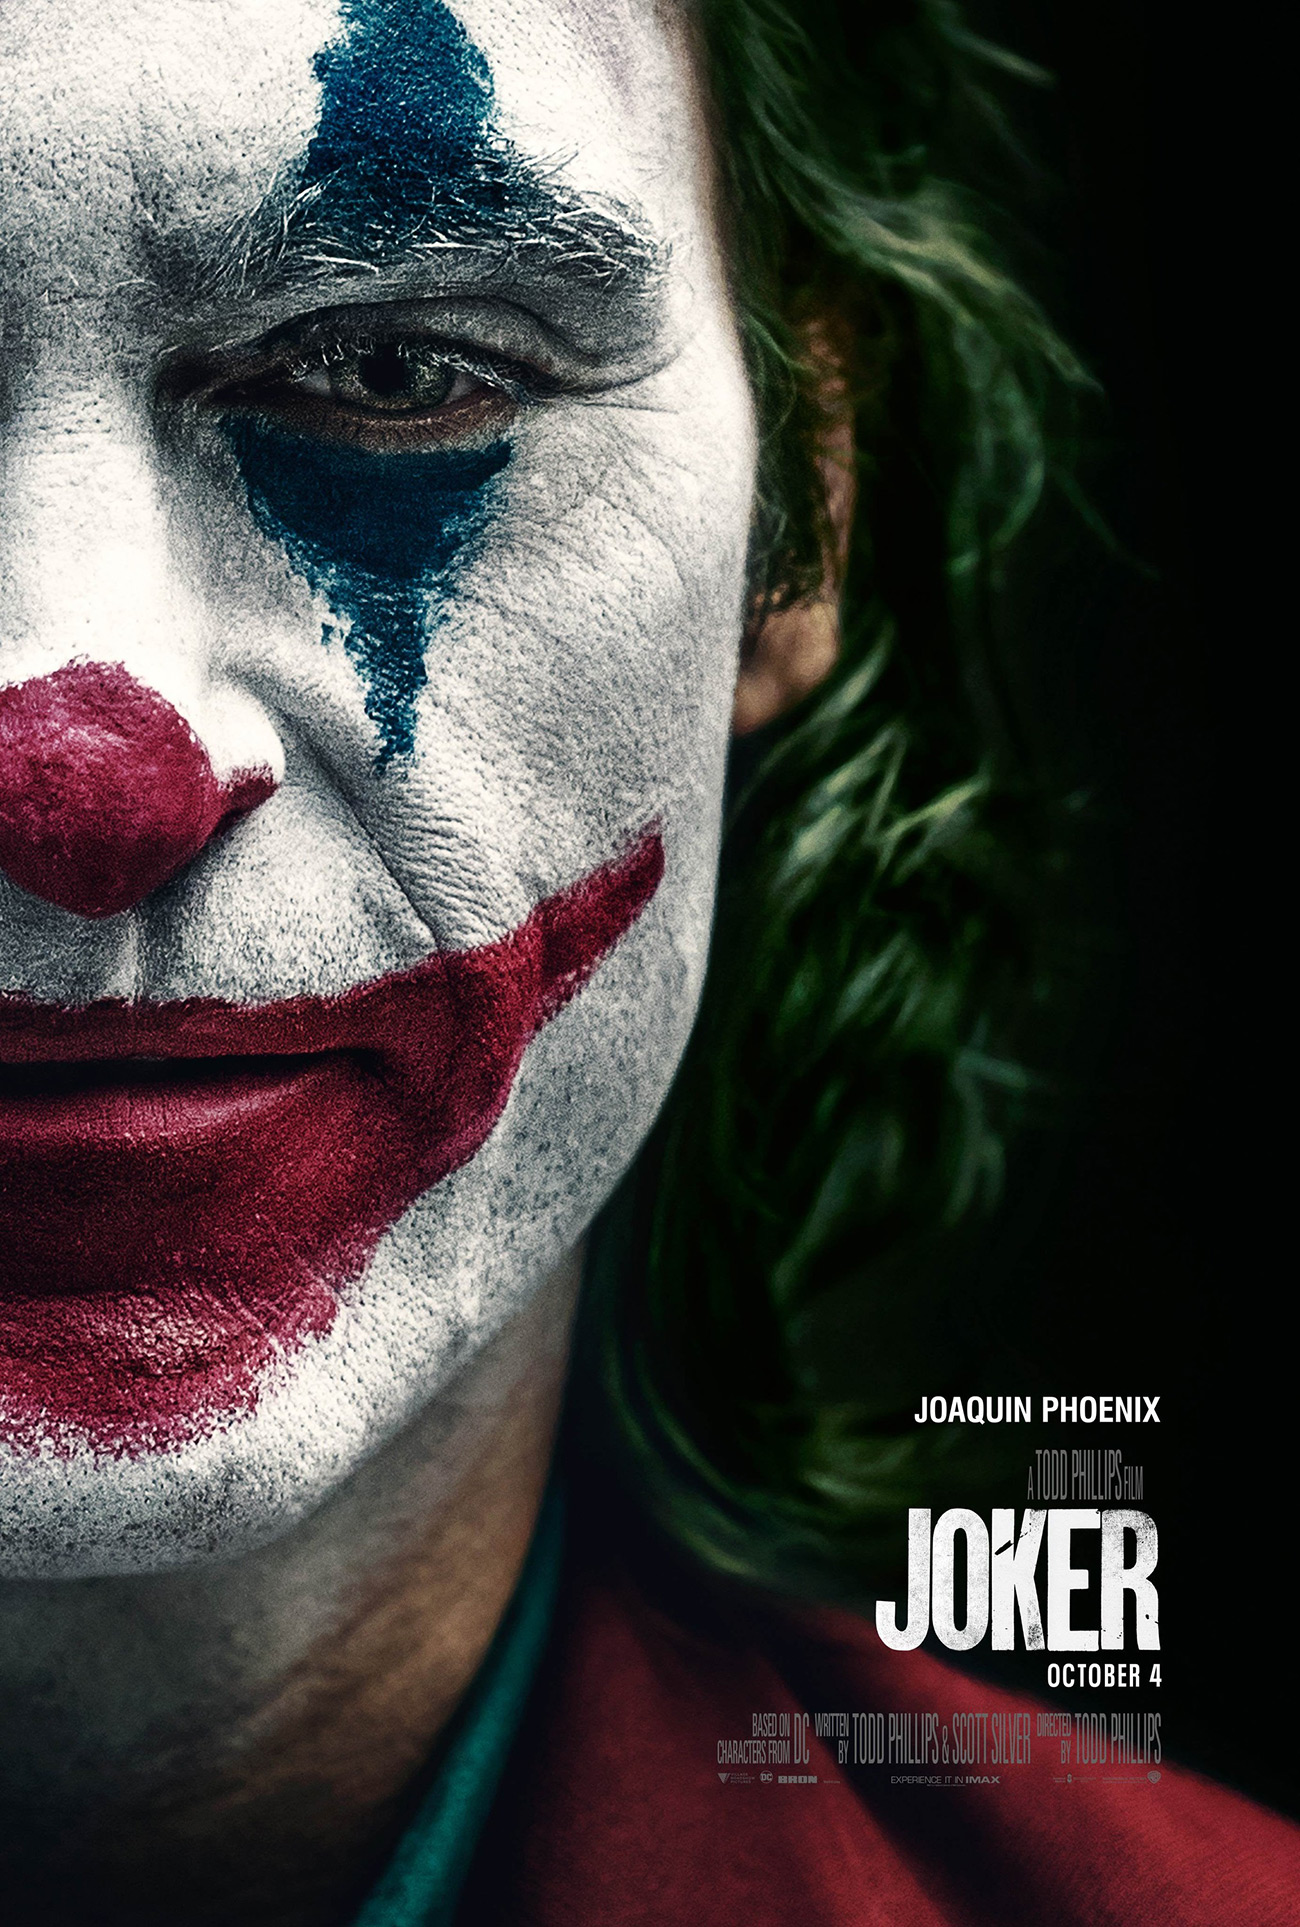 Download Joker (2019) English Blu-Ray Movie In 480p [350 MB] | 720p [1 GB] | 1080p [2 GB]